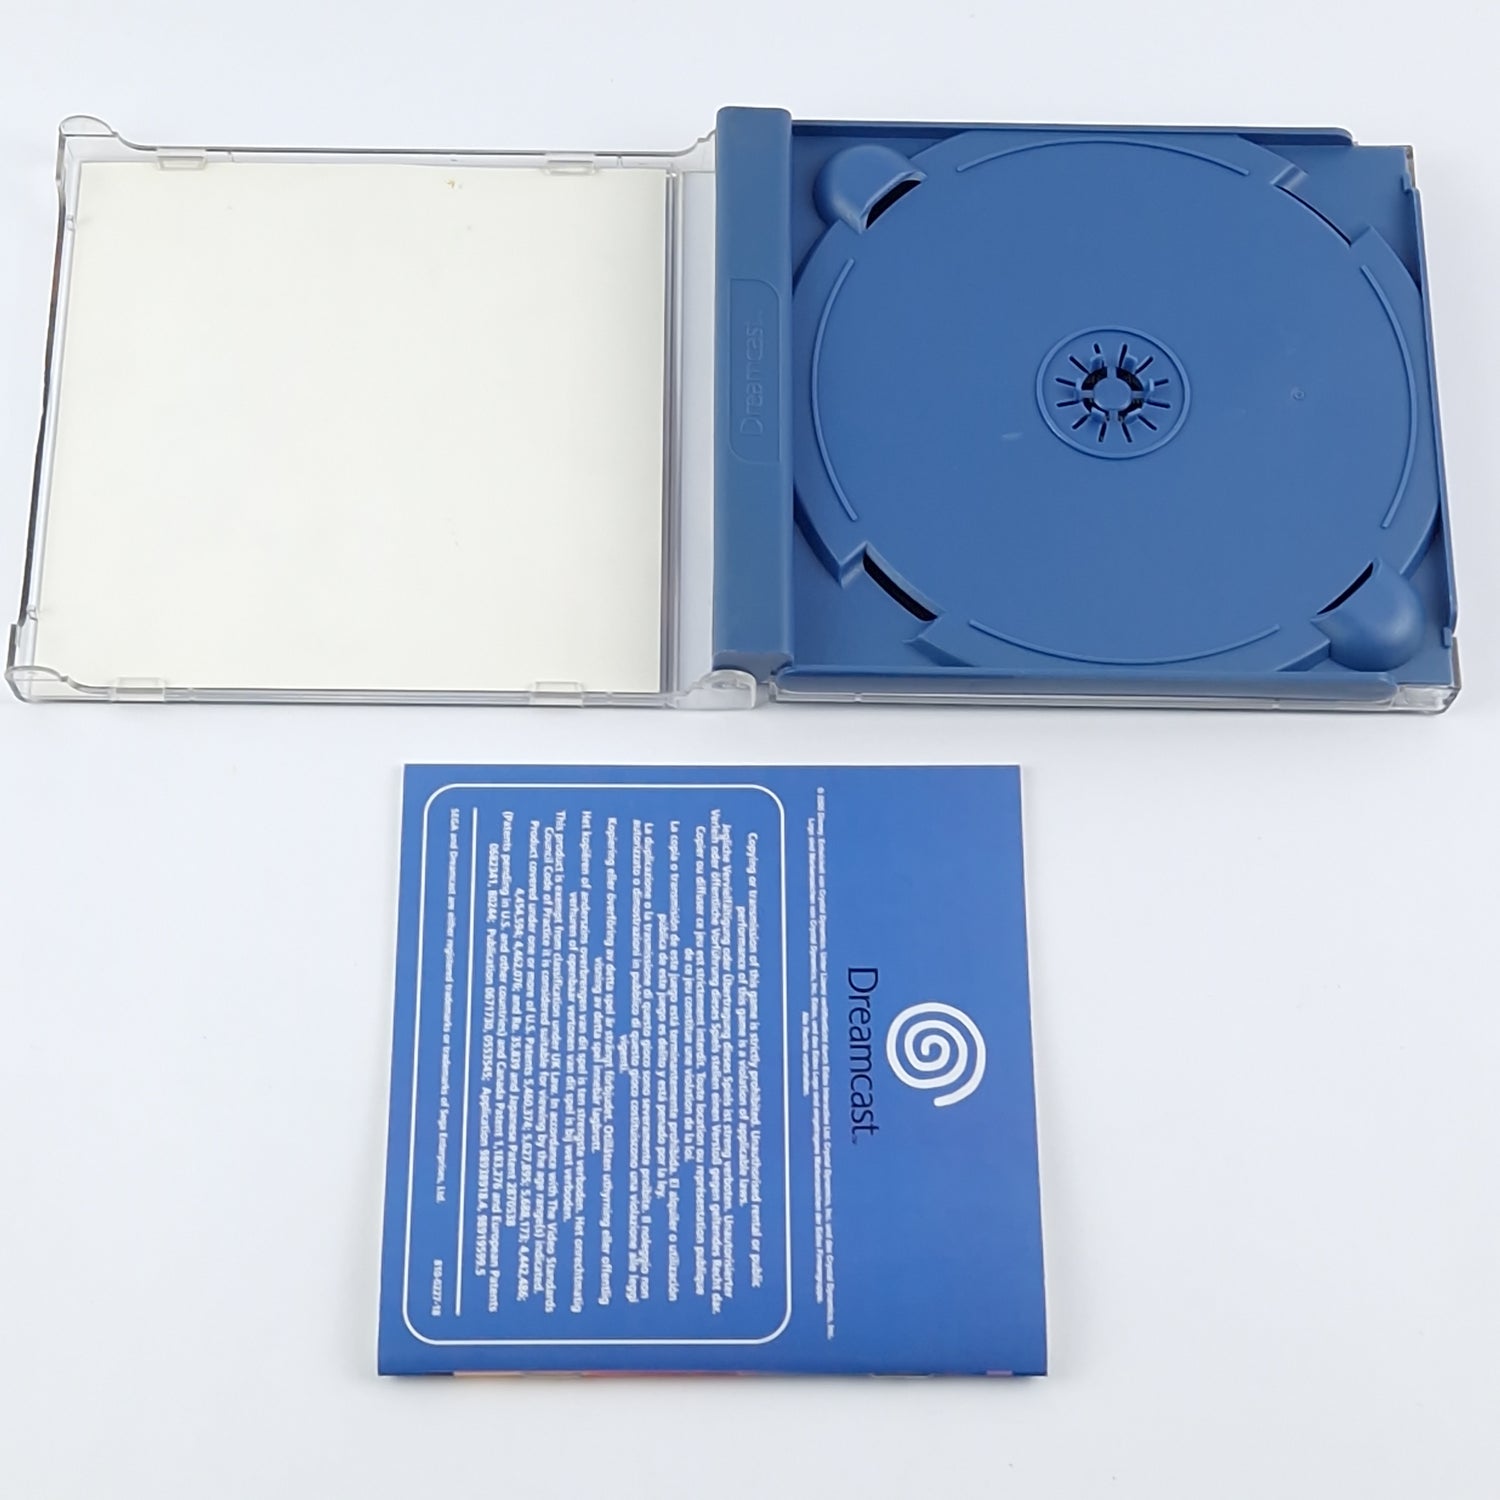 Sega Dreamcast Game: Disney's 102 Dalmatians - OVP Instructions CD | PAL DC Game